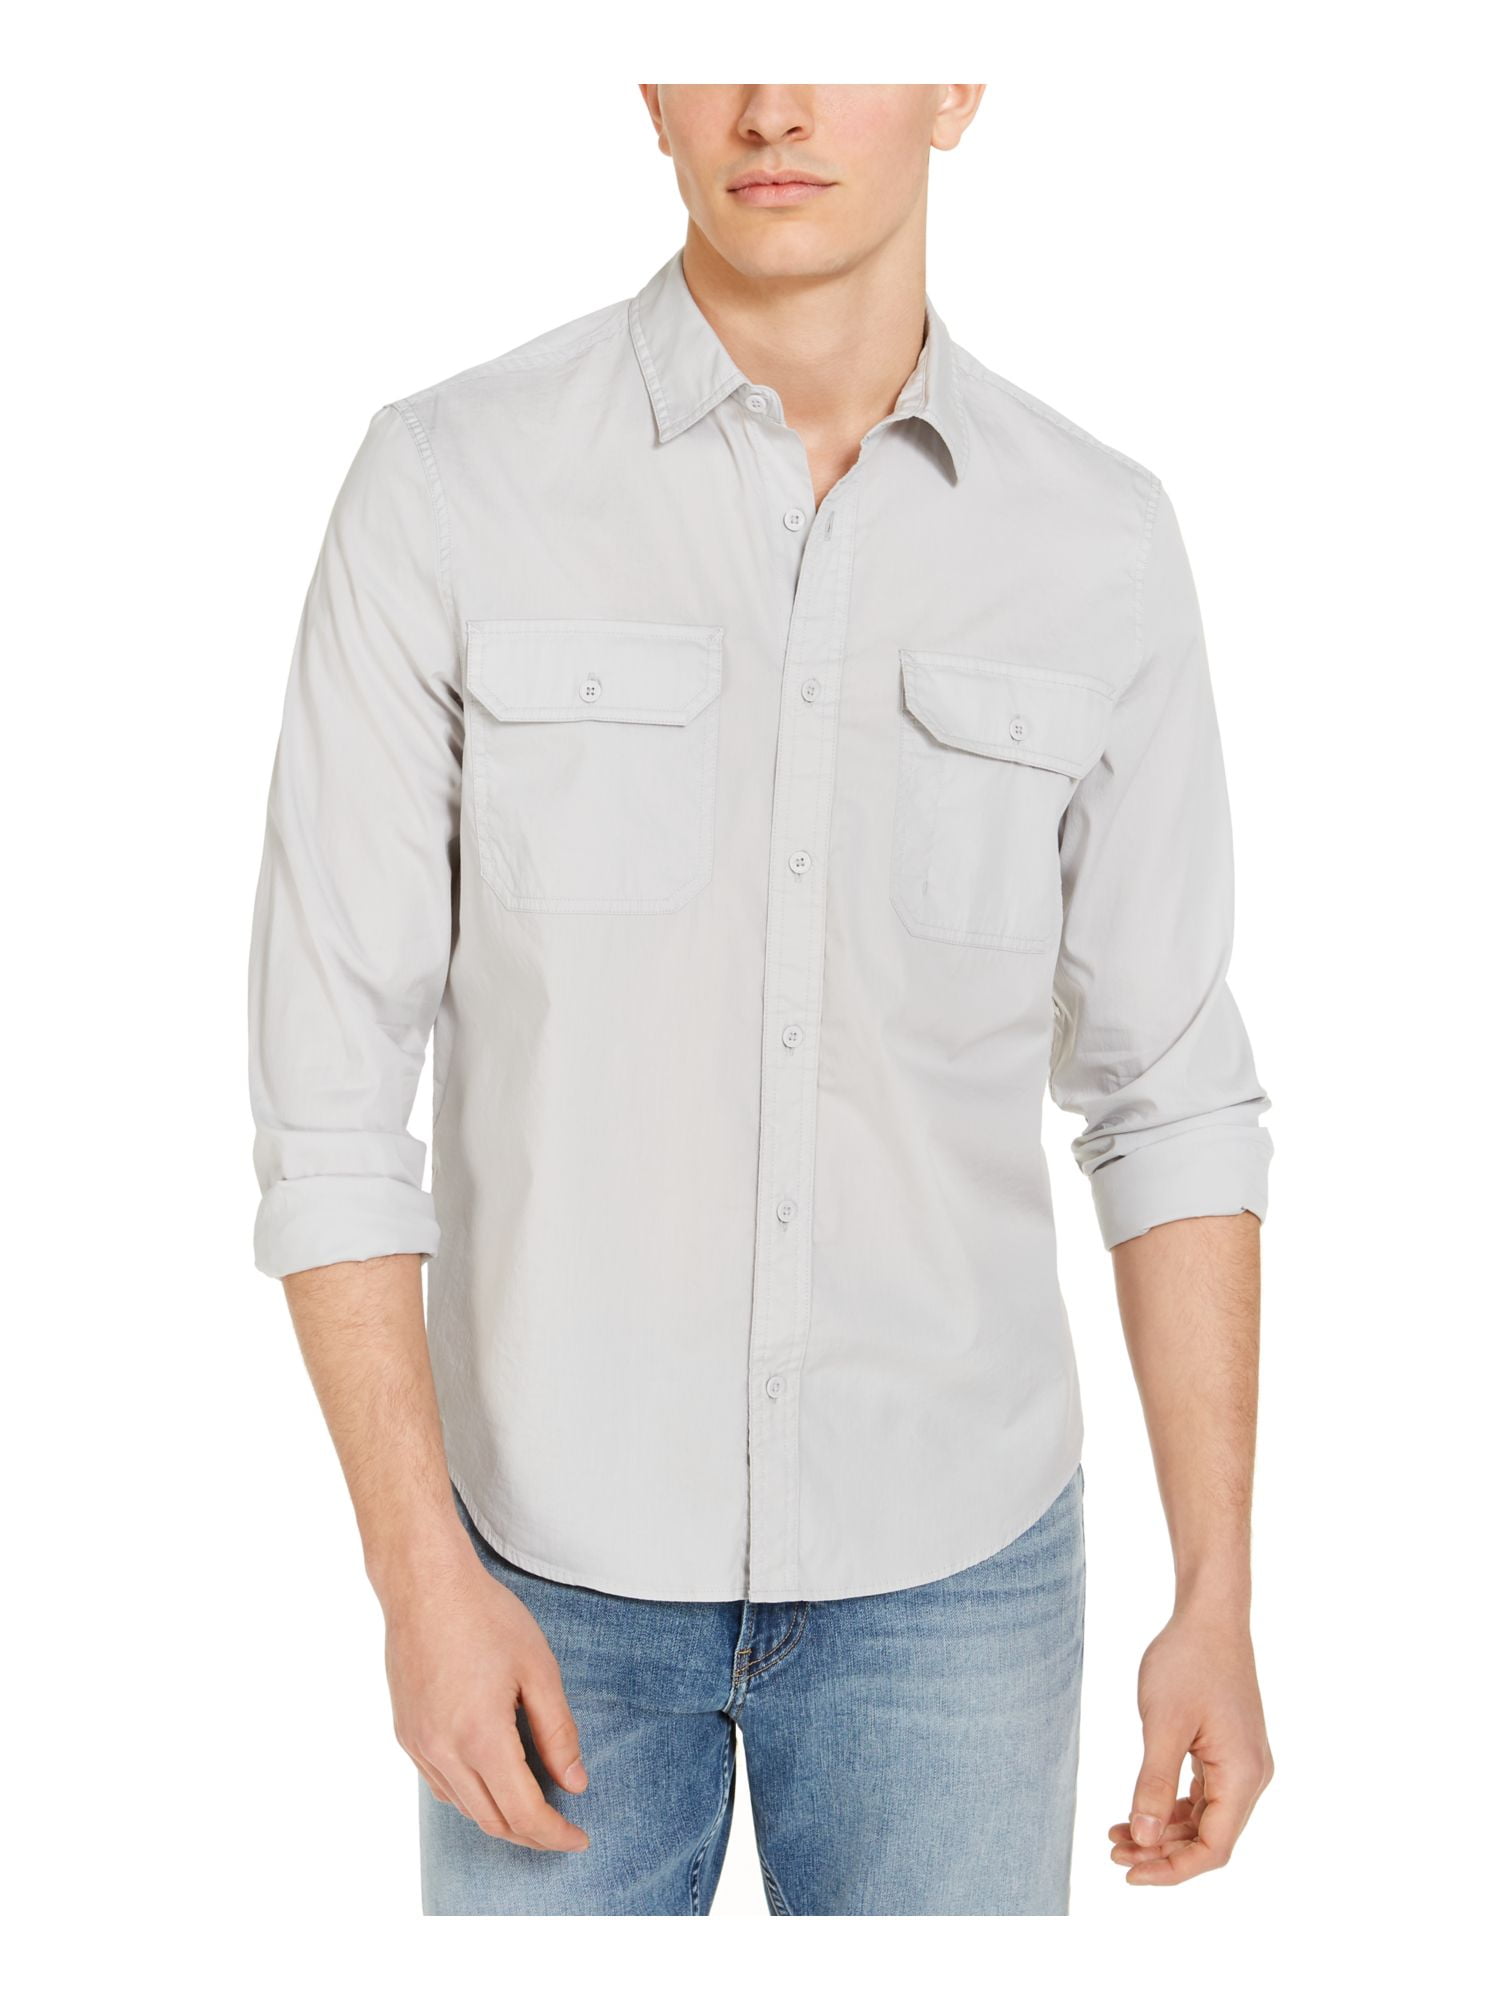 Details about   NWT INC Mens Zipper Pocket Collar Top Button-Down Shirt XS/M/L Q8 